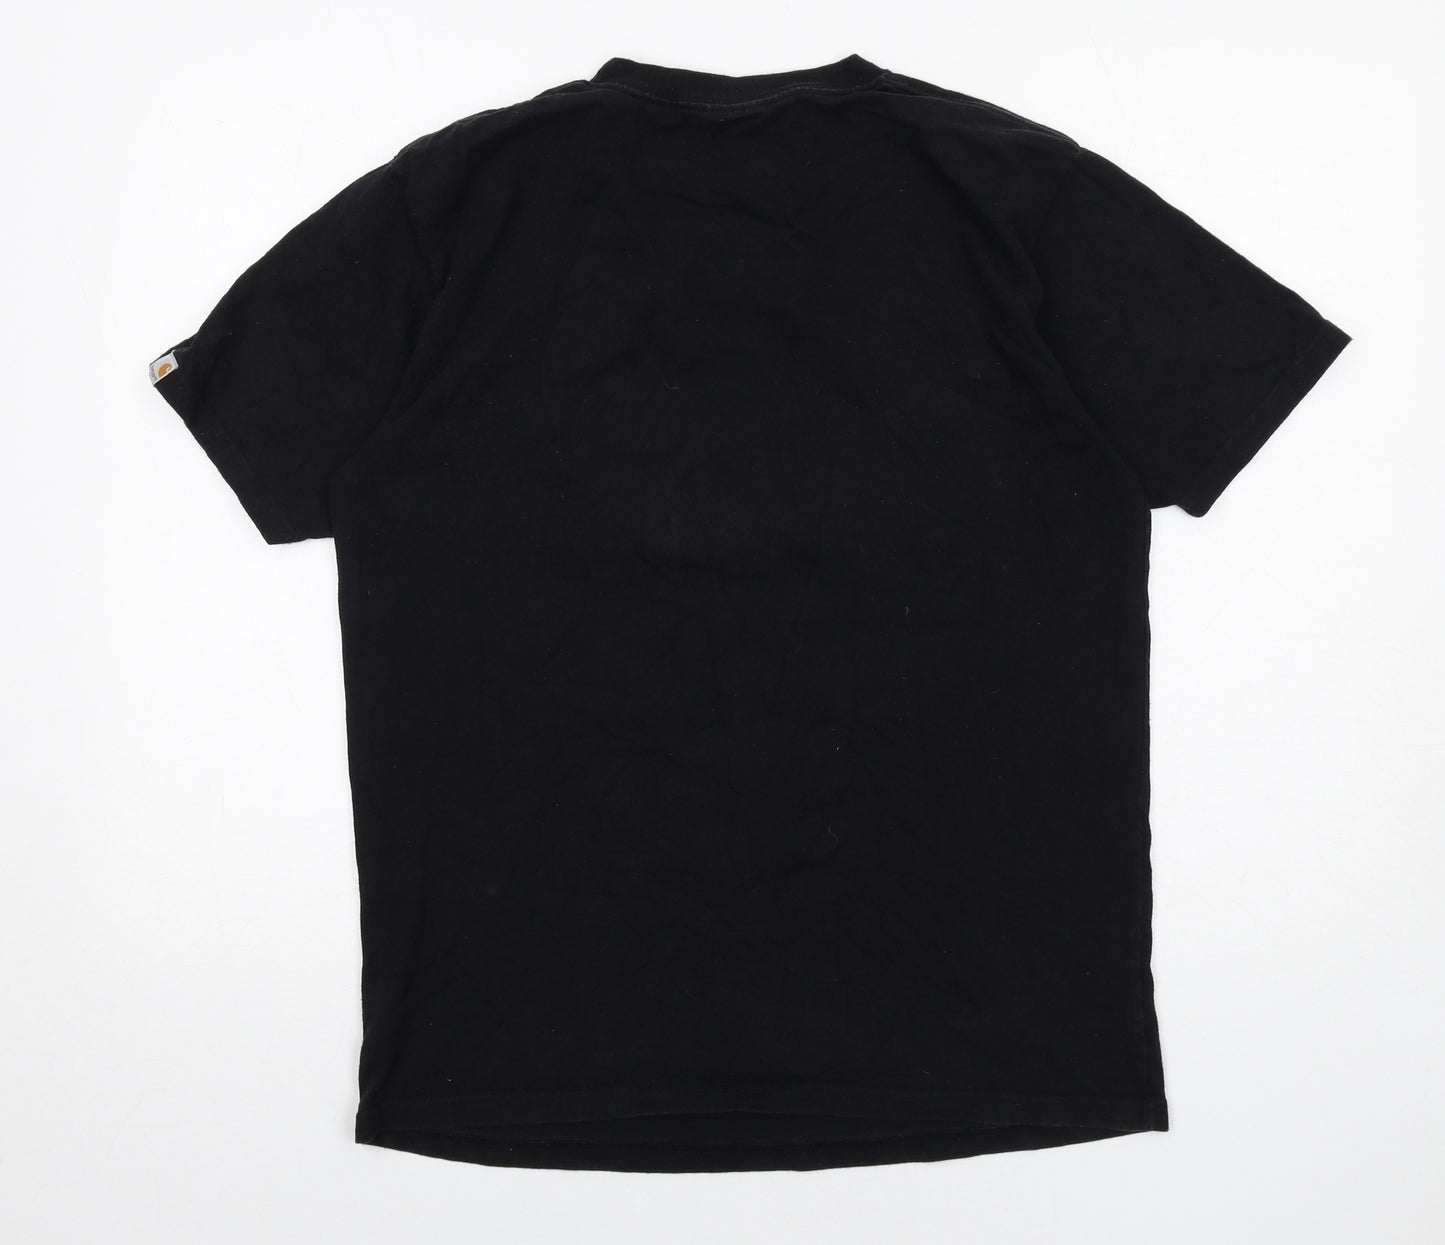 Carhartt Mens Black Cotton T-Shirt Size M Round Neck